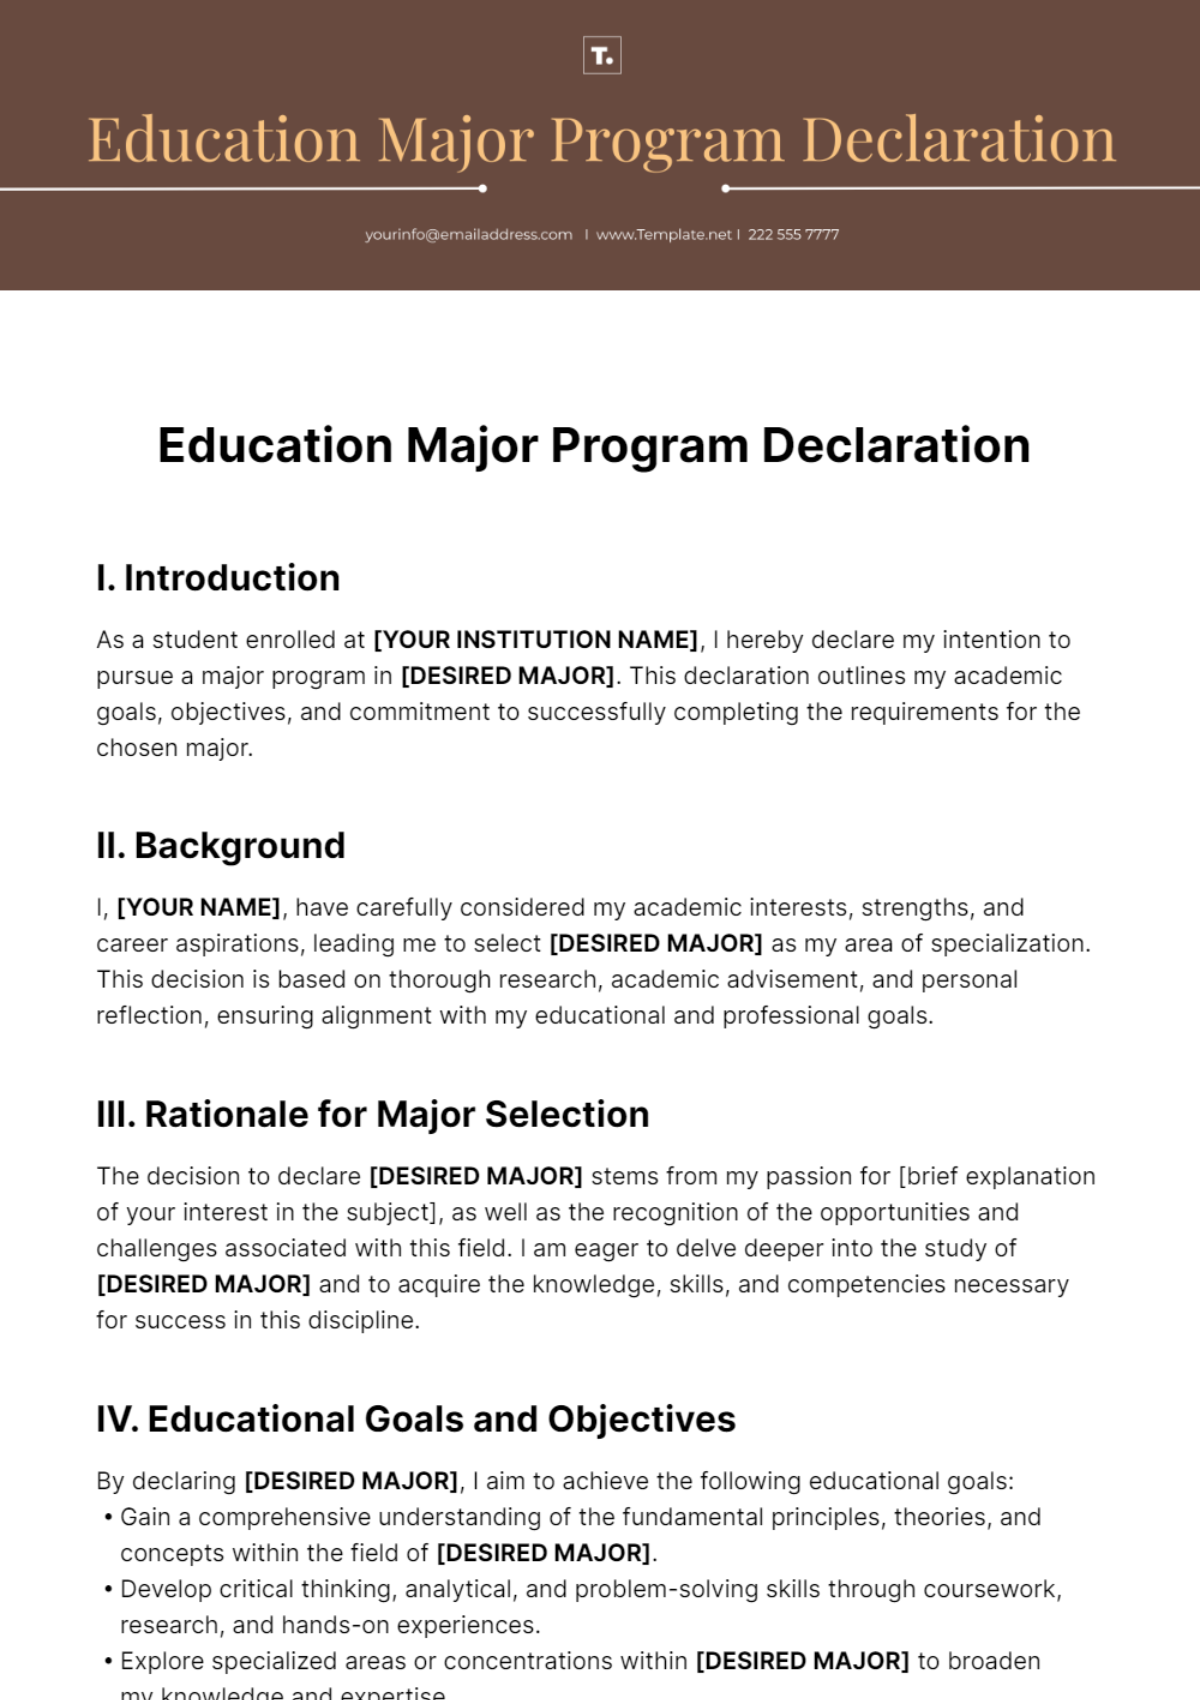 Free Education Major Program Declaration Template